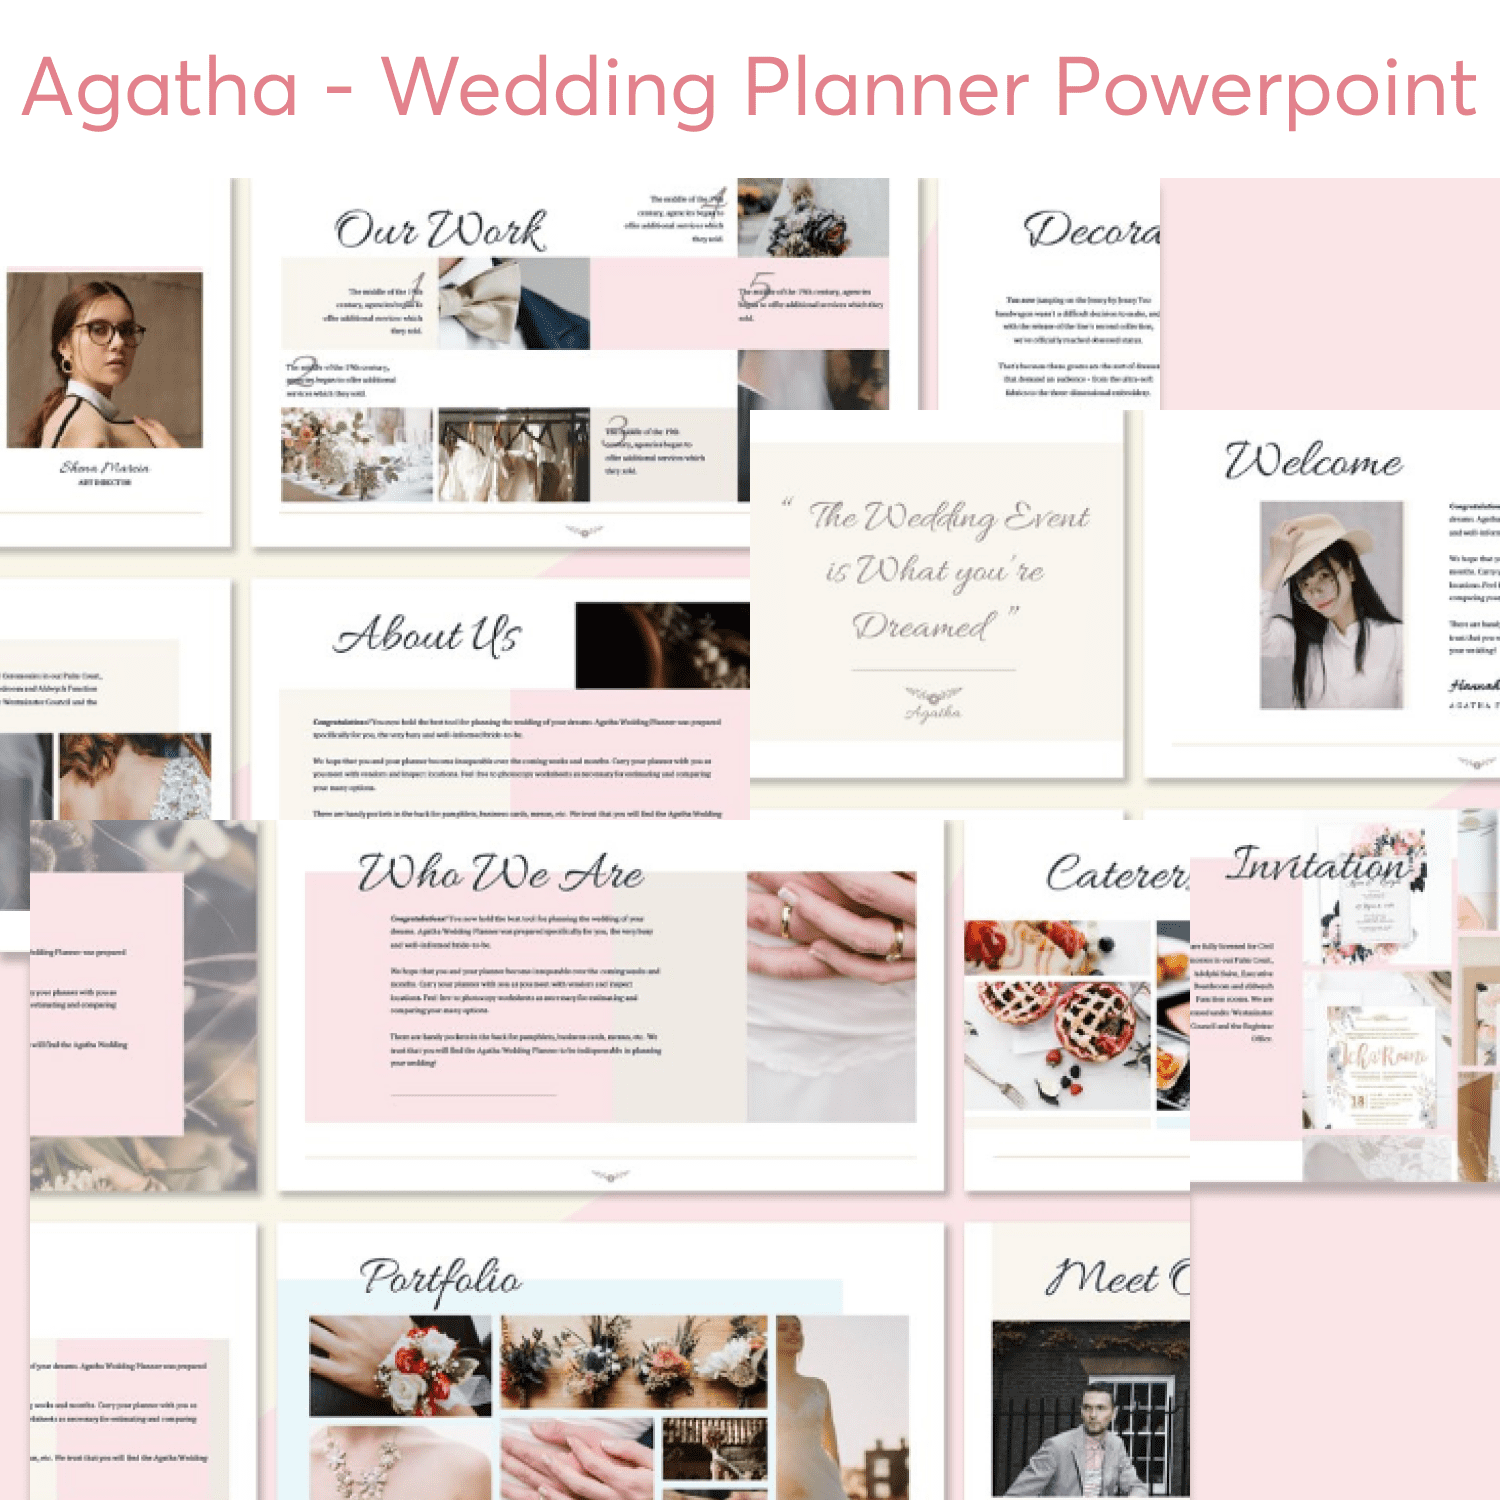 Agatha - Wedding Planner Powerpoint cover.